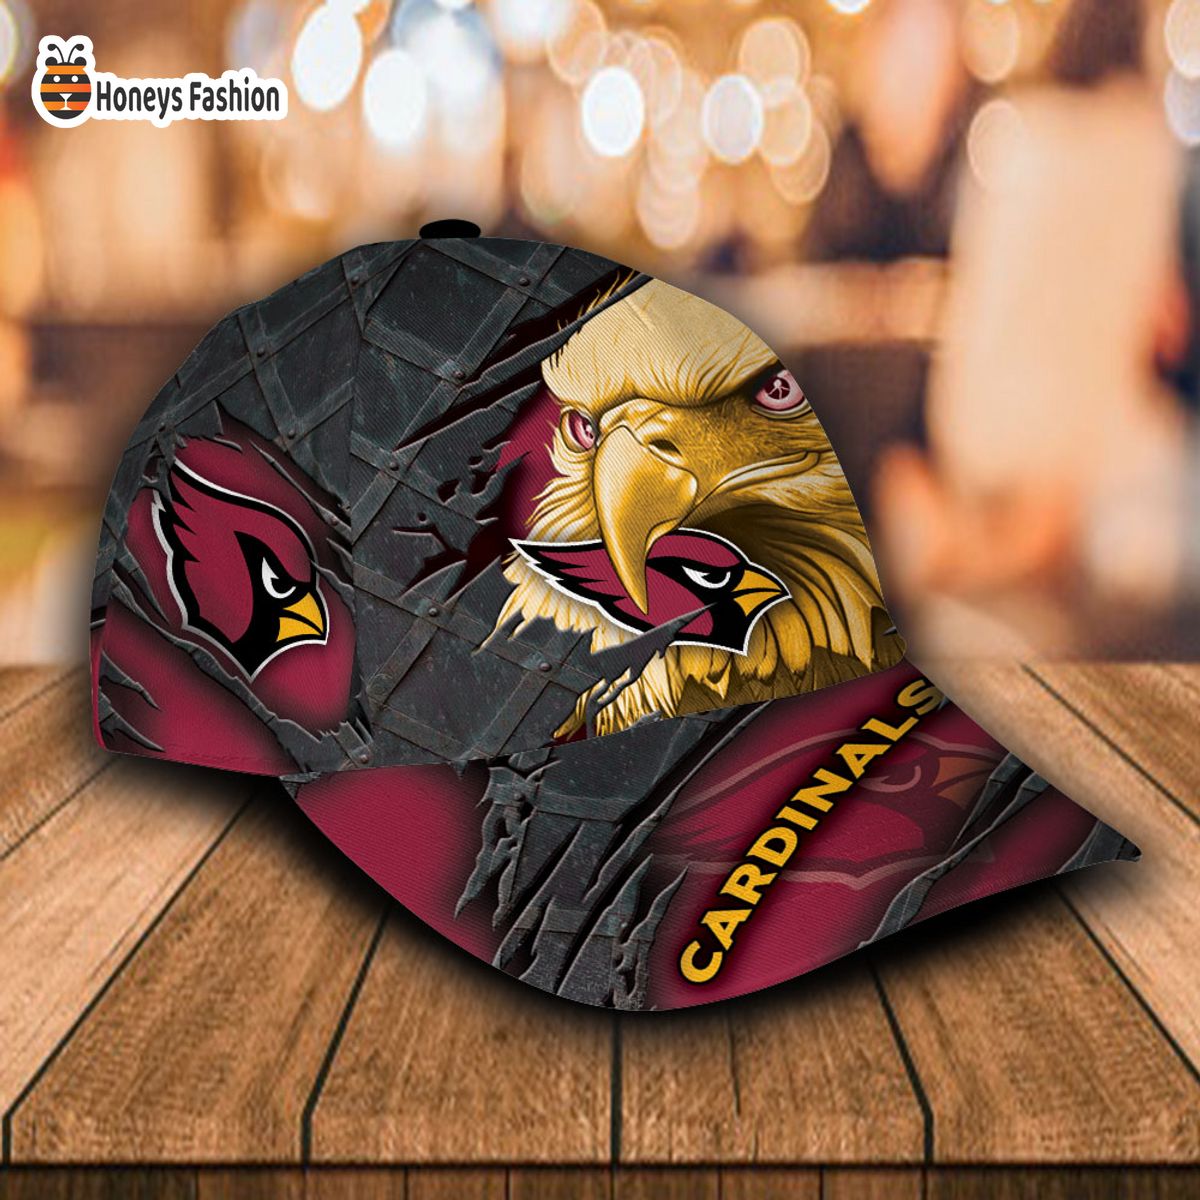 Arizona Cardinals NFL Eagle Custom Name Classic Cap